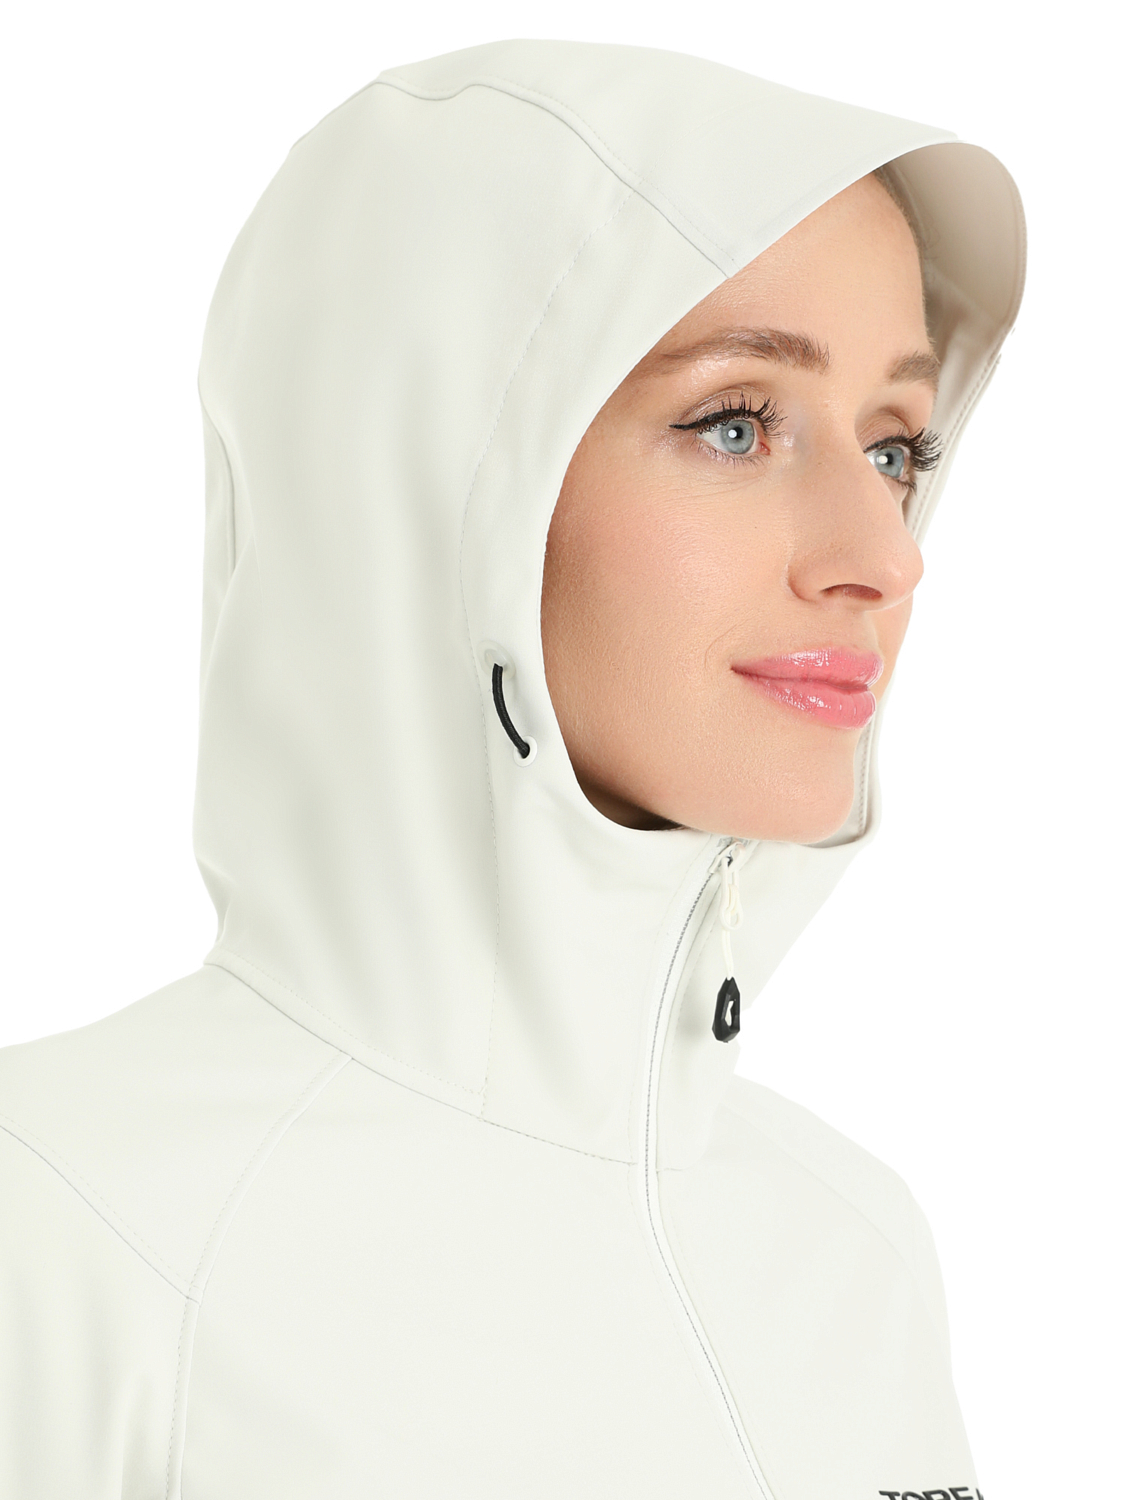 Куртка Toread Women's softshell jacket White fish maw